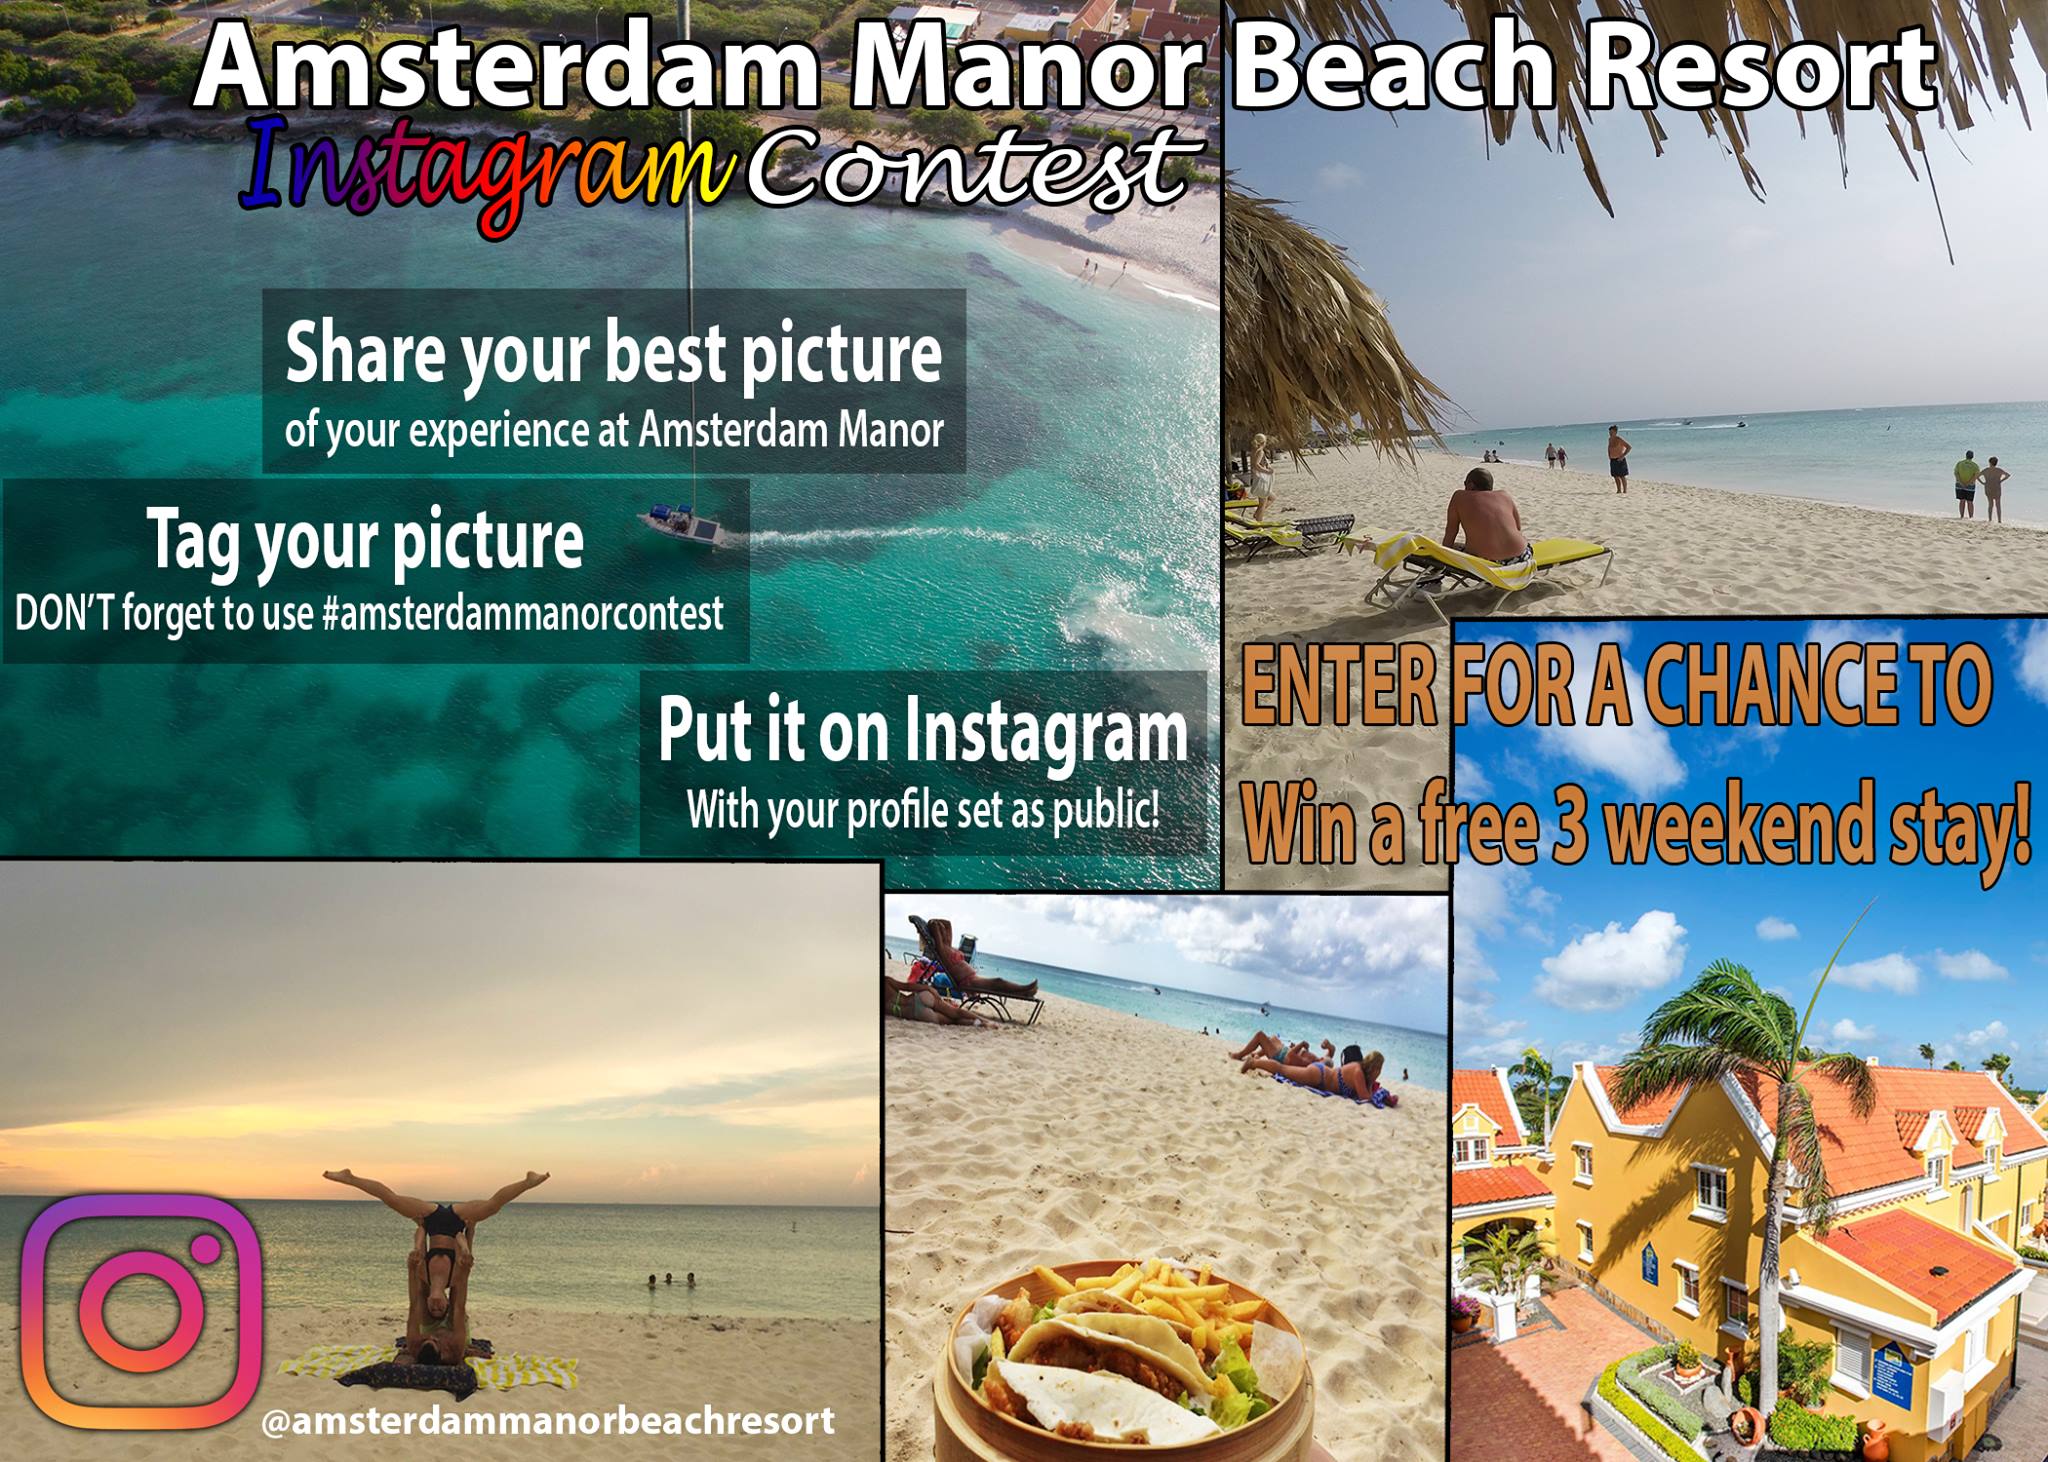 Amsterdam Manor Beach Resort “Instagram Contest”.